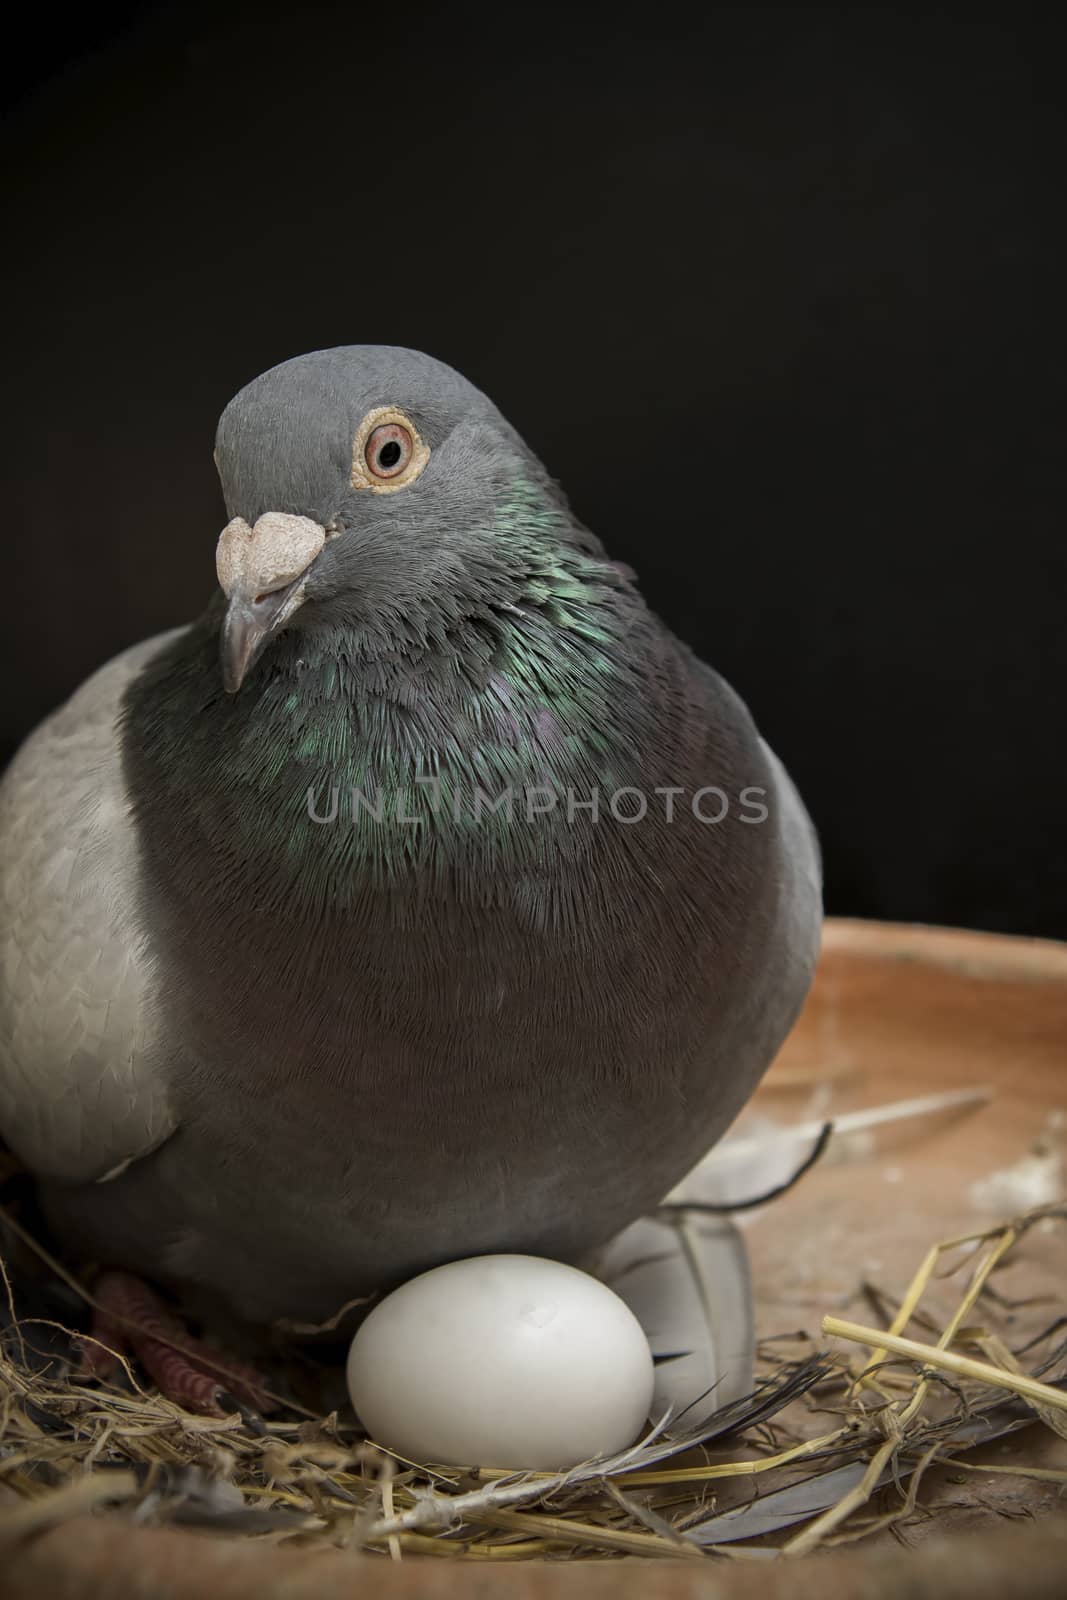 pigeion bird hatching egg in home loft by khunaspix